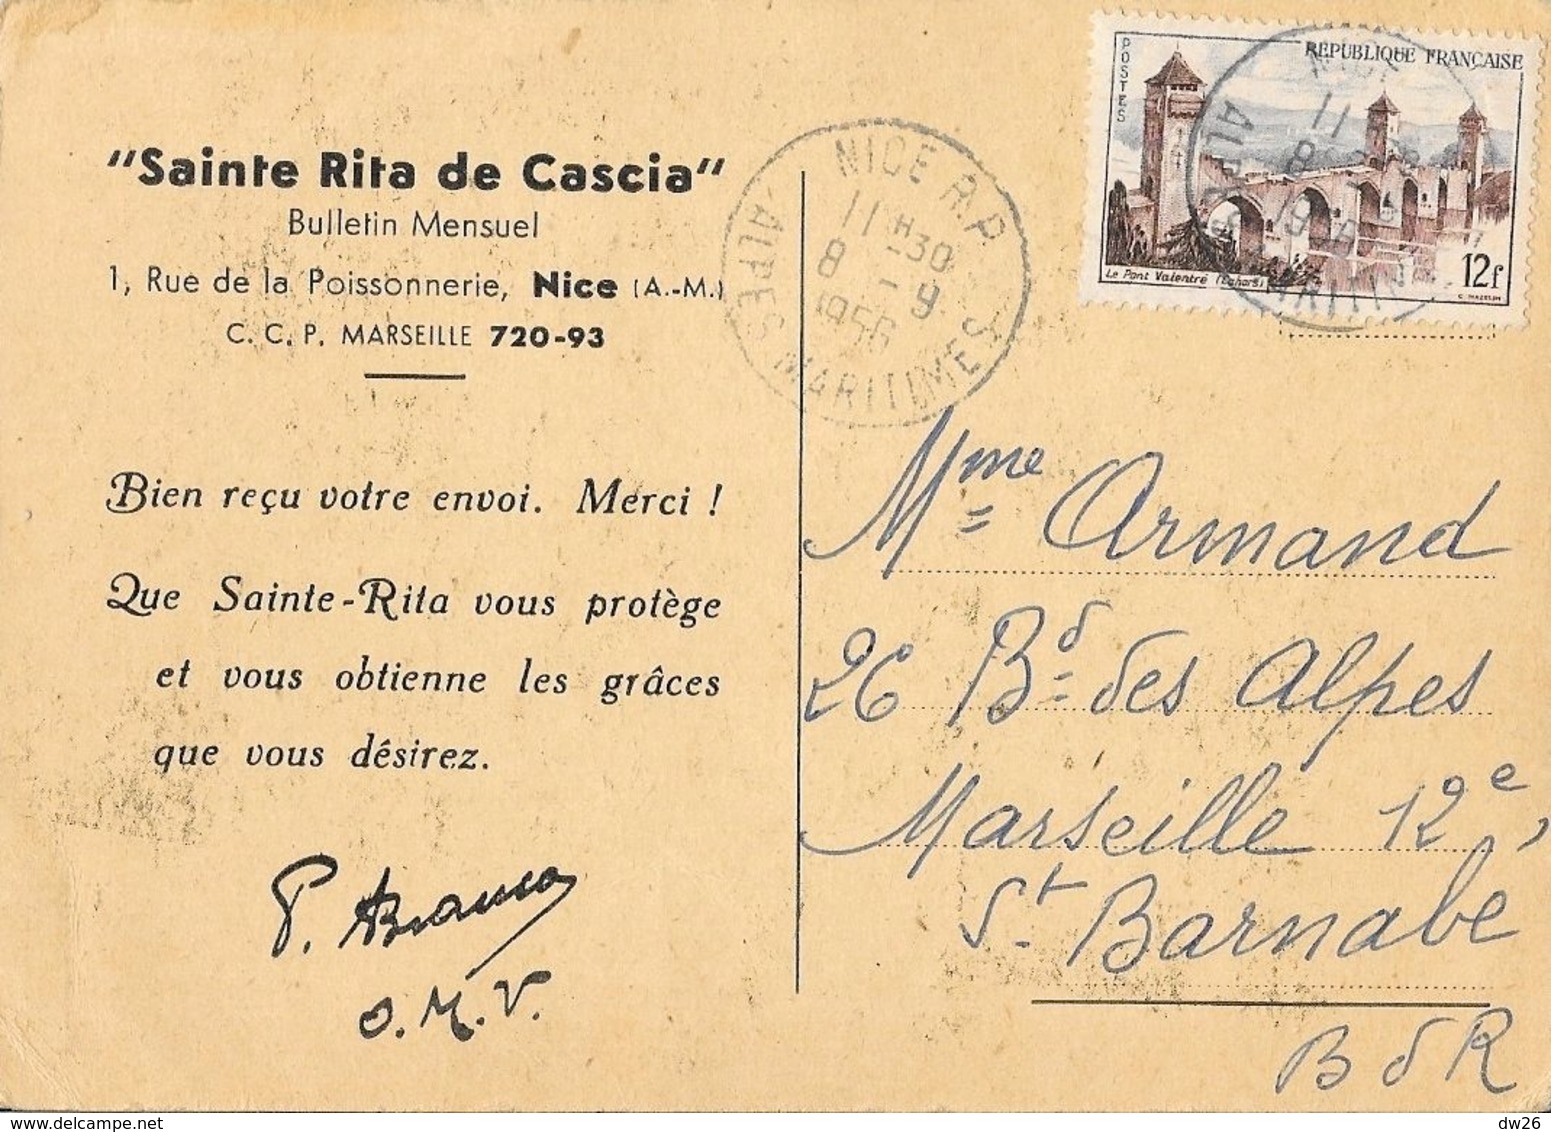 Ste Sainte Rita De Cascia - Adhésion Bulletin Mensuel Nice 1956 - Santi